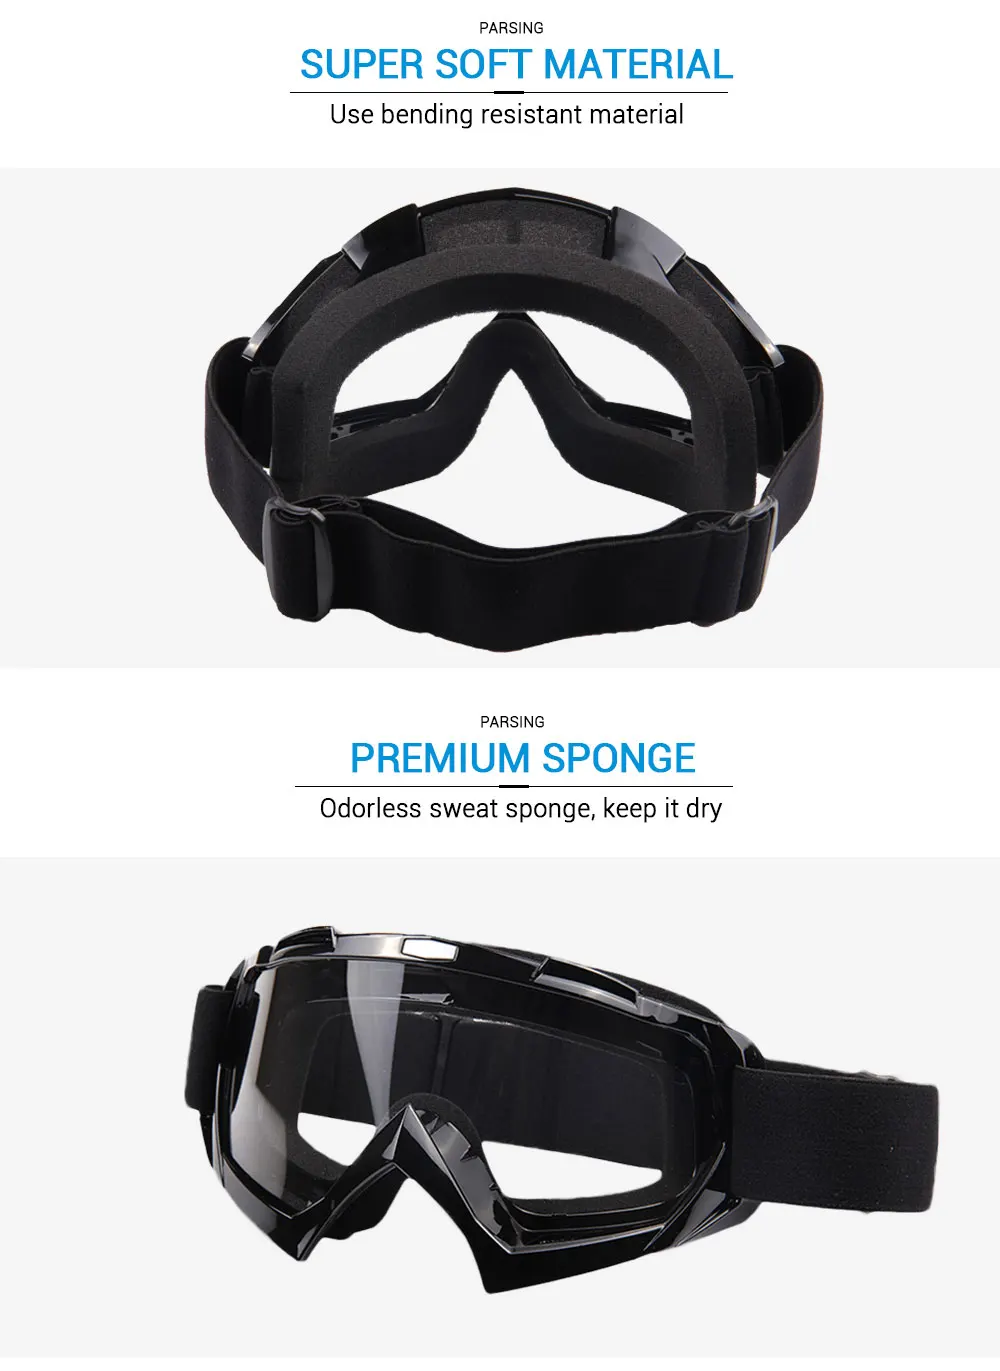 HEROBIKE Motorcycle Off-Road Racing Goggles Winter Skate Sled ATV Eyewear Motocross DH MTB Glasses Single Lens Clears